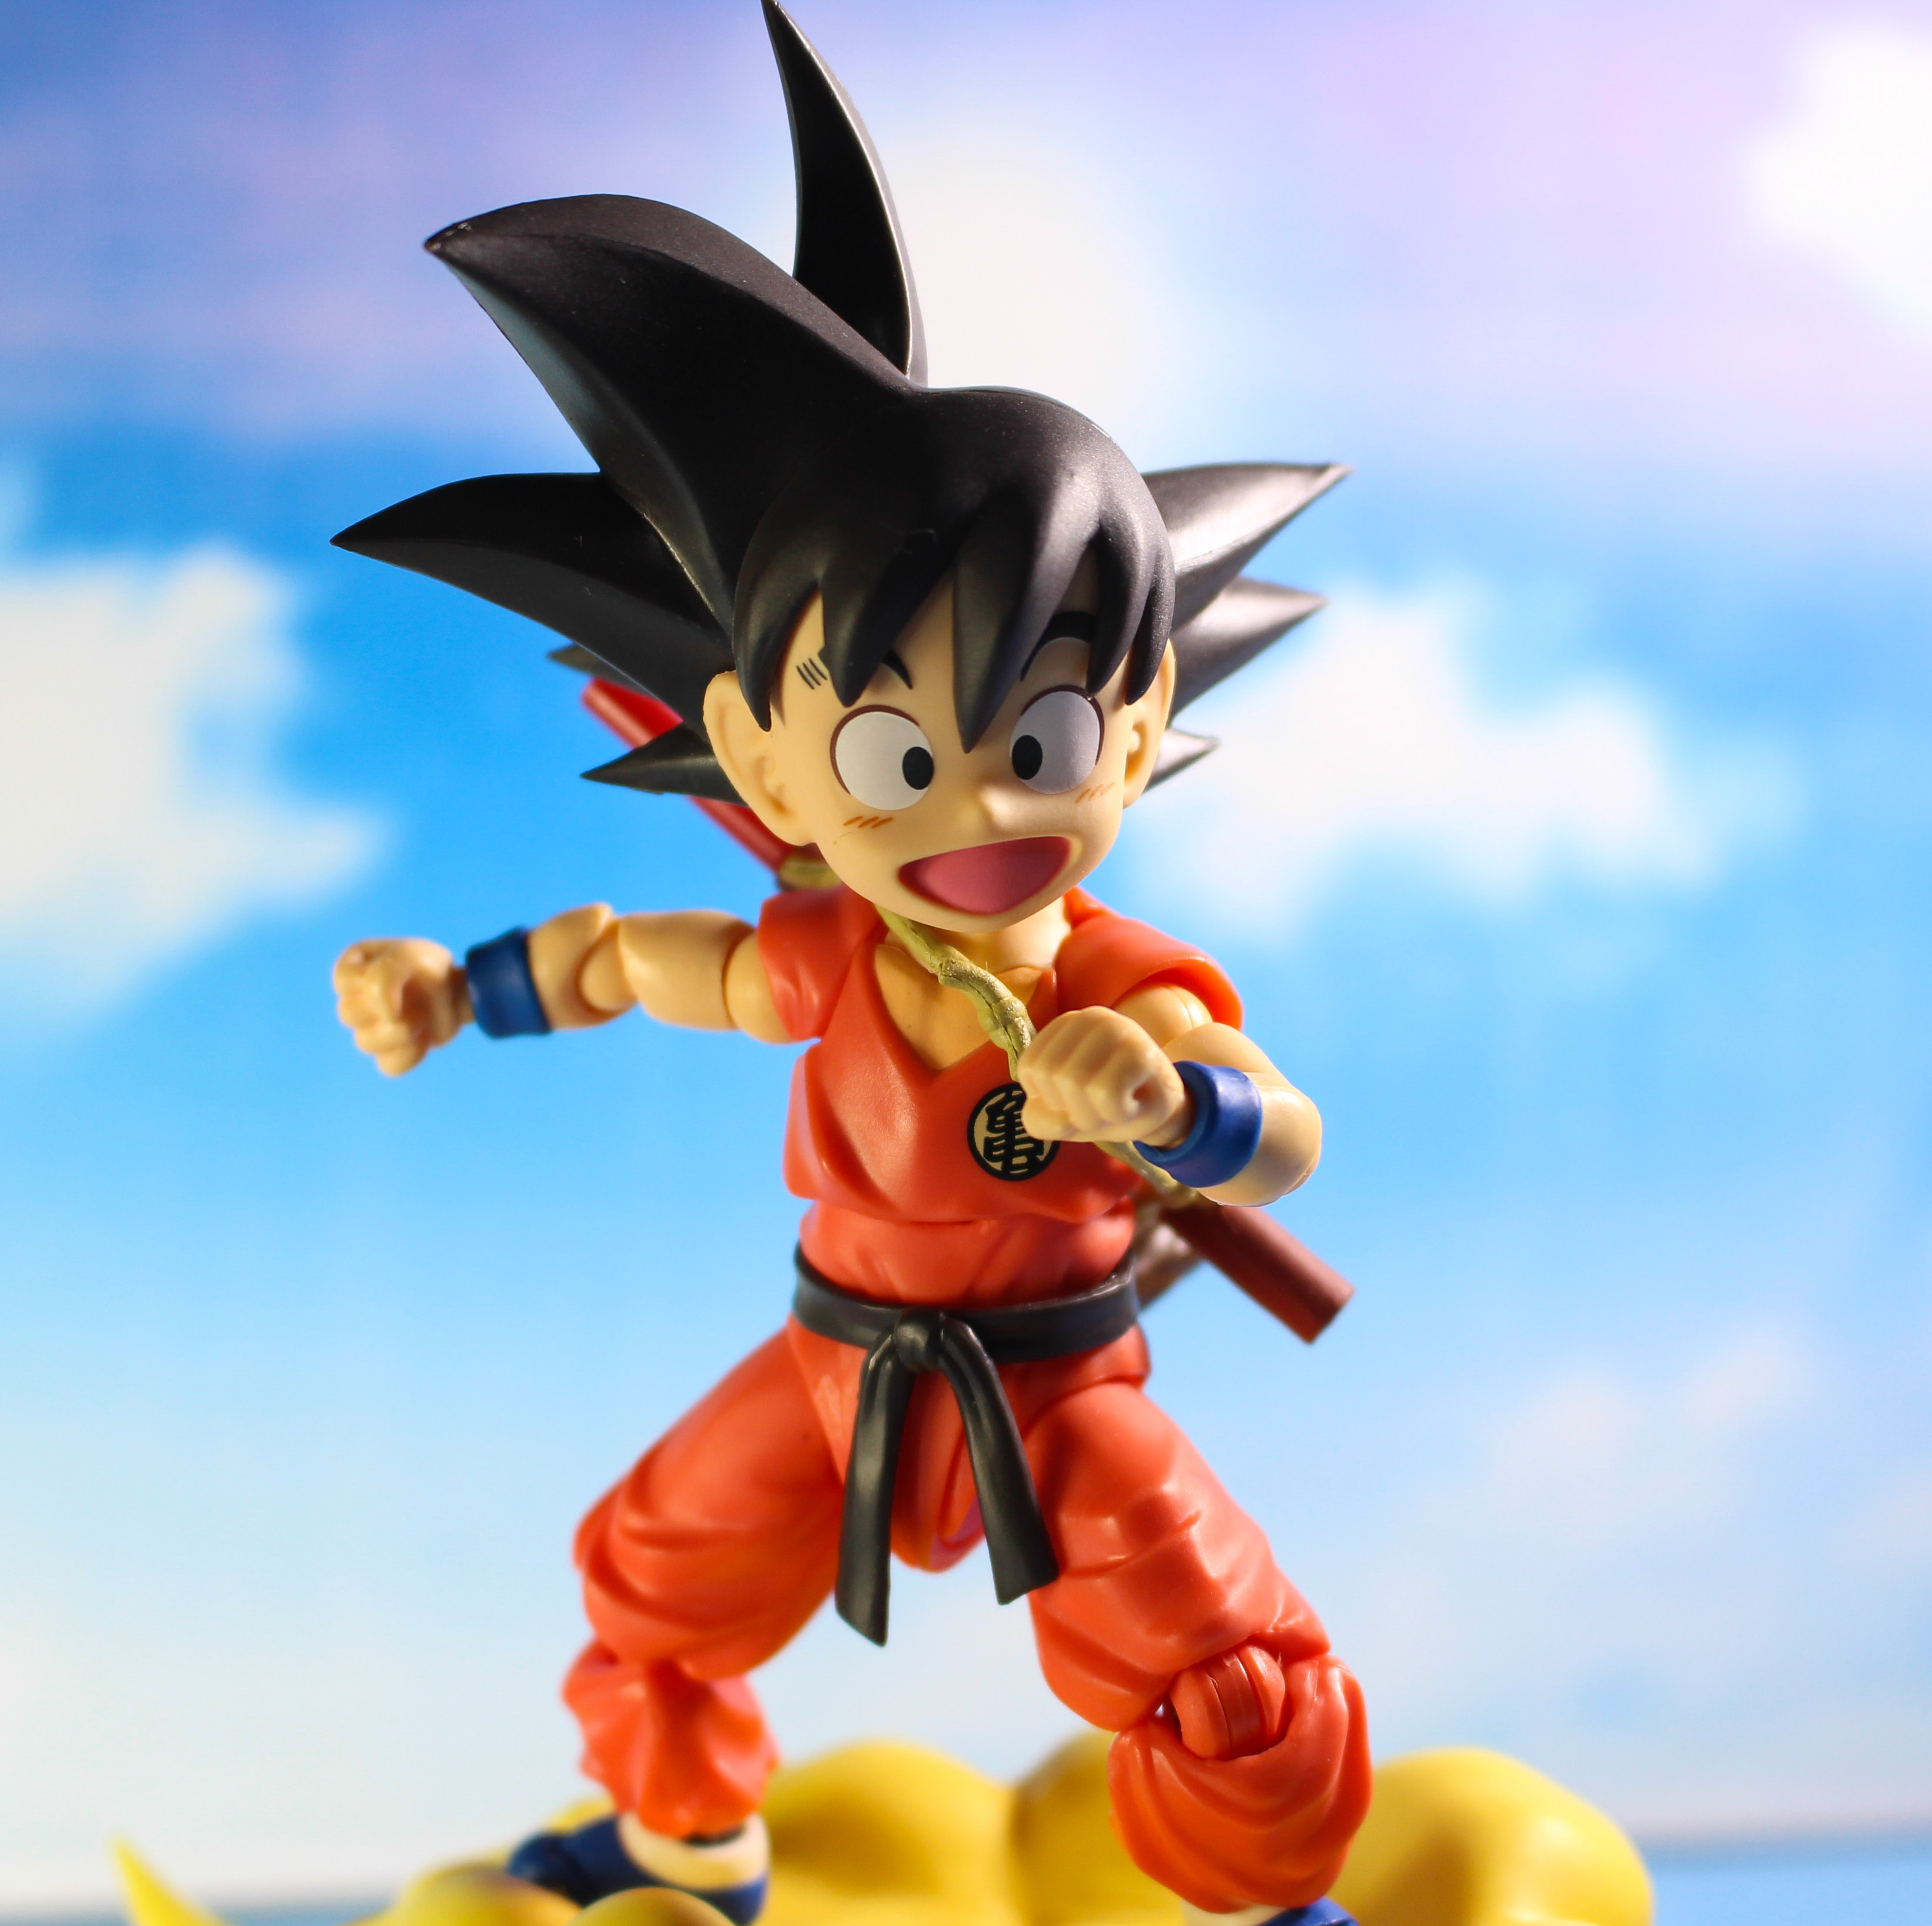 PT-BR] Son Goku - Boneco S.H. Figuarts (Dragon Ball Z) Review